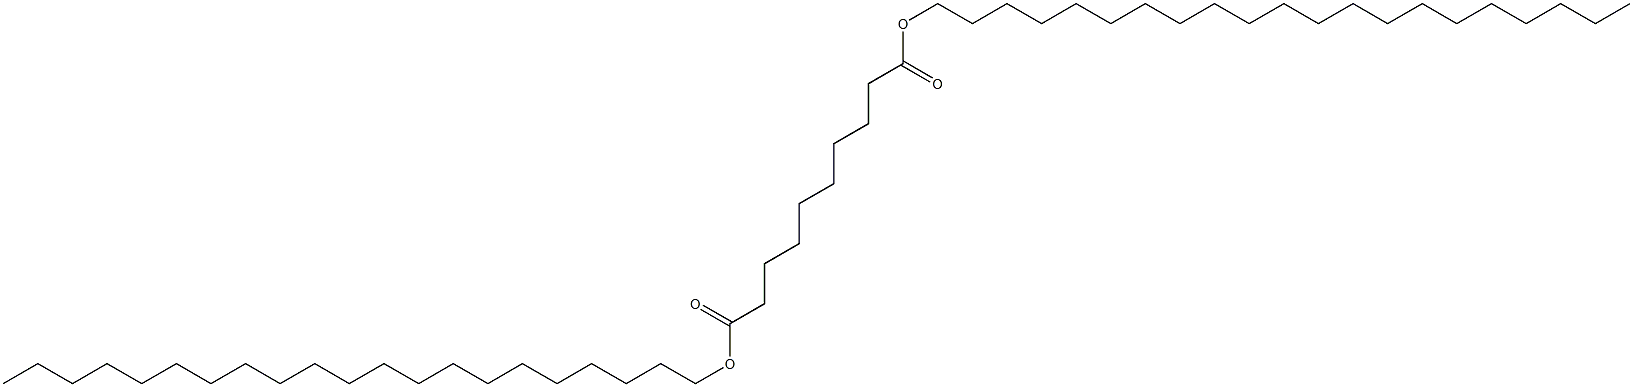 Sebacic acid dihenicosyl ester